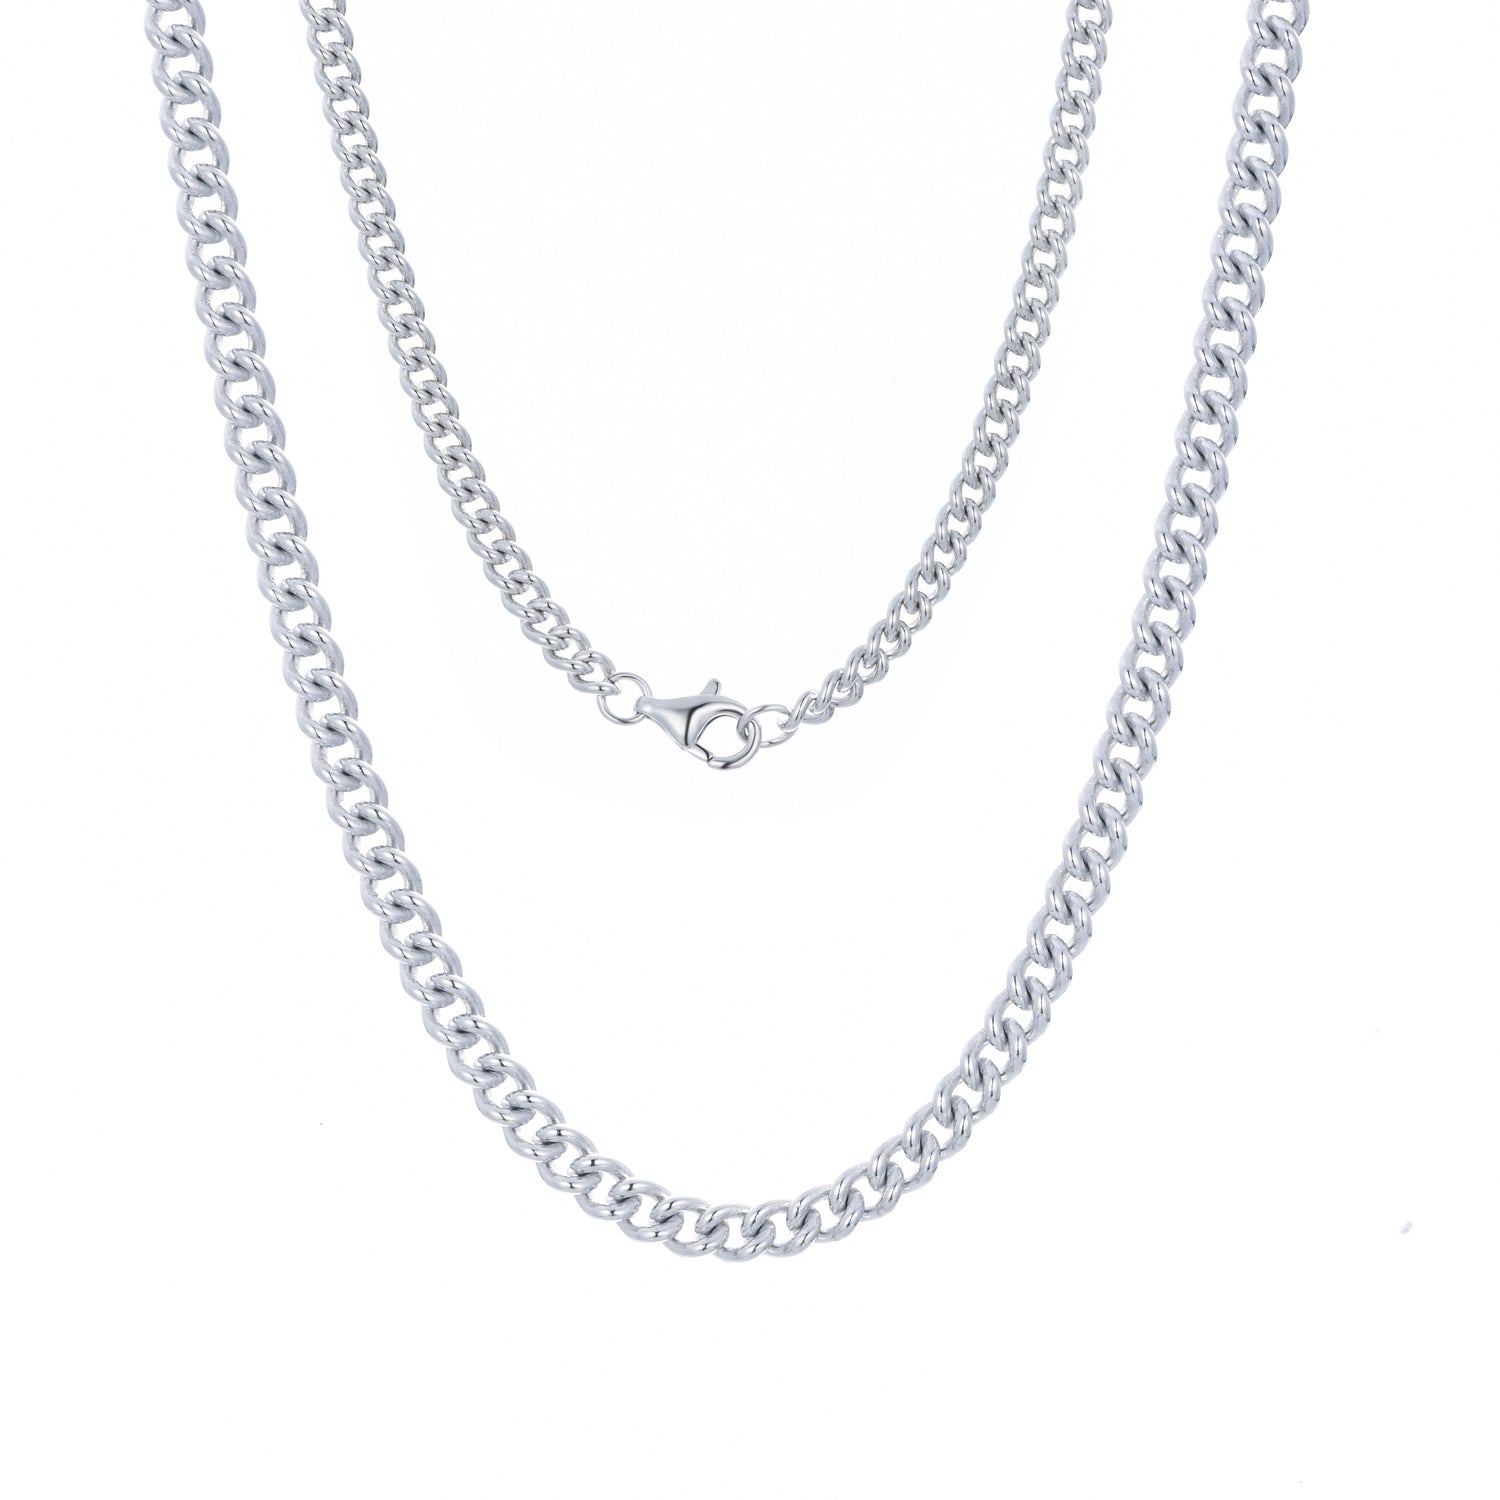 AEON II | Chicago Chain Necklace | Rhodium Plated 925 Silver